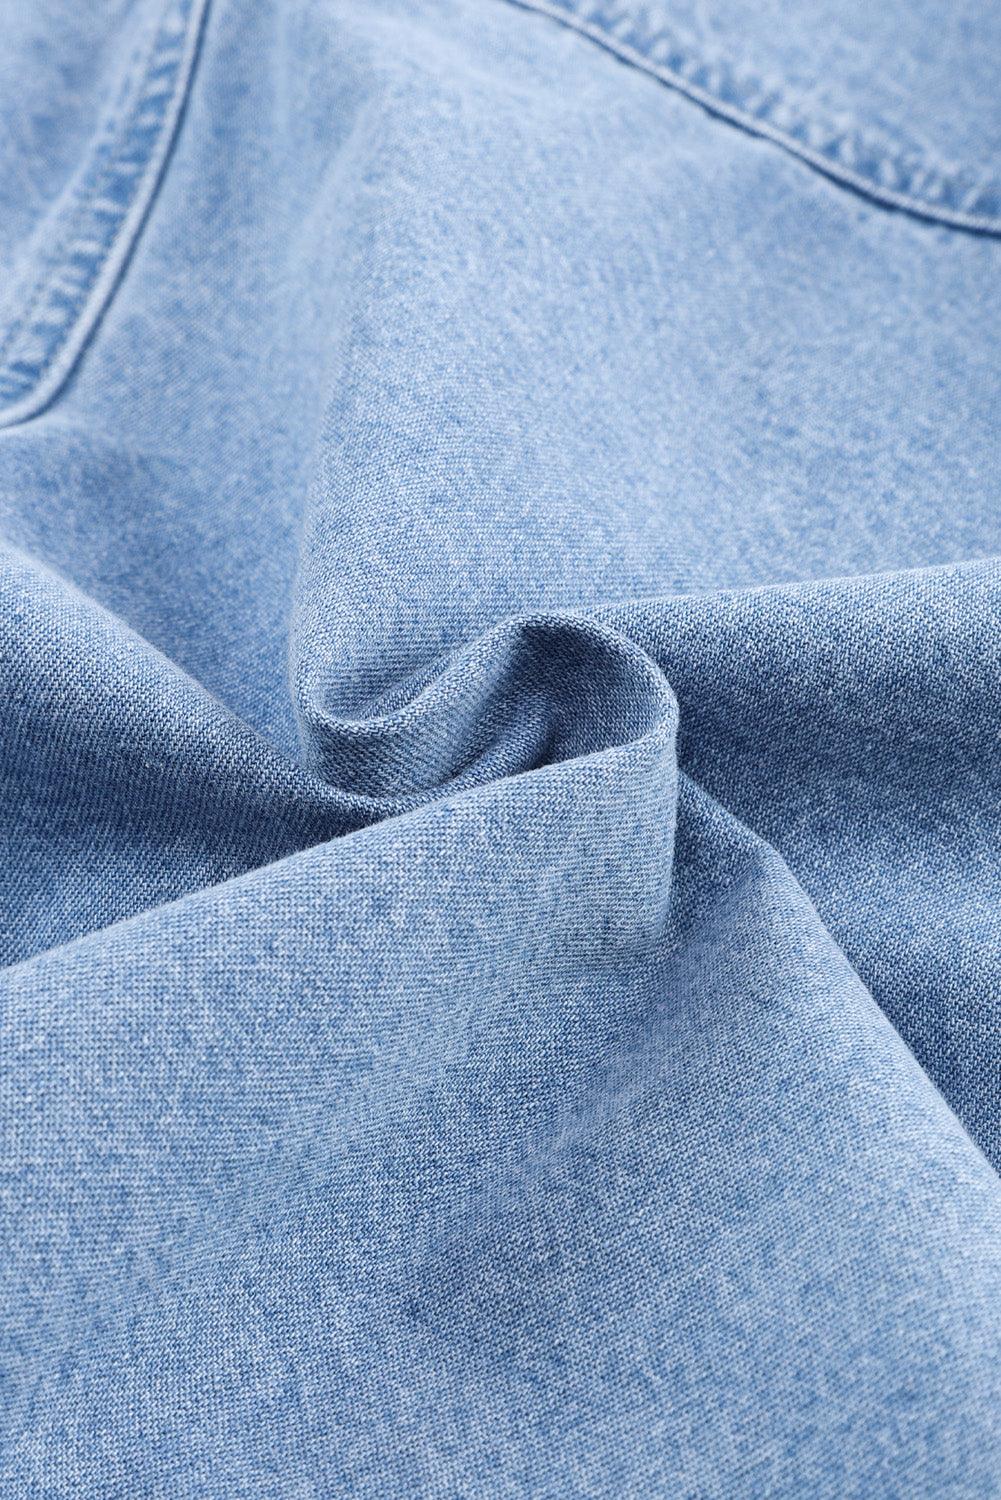 Sky Blue Roll-Up Tab Sleeve Button Down Pocket Denim Jacket - L & M Kee, LLC